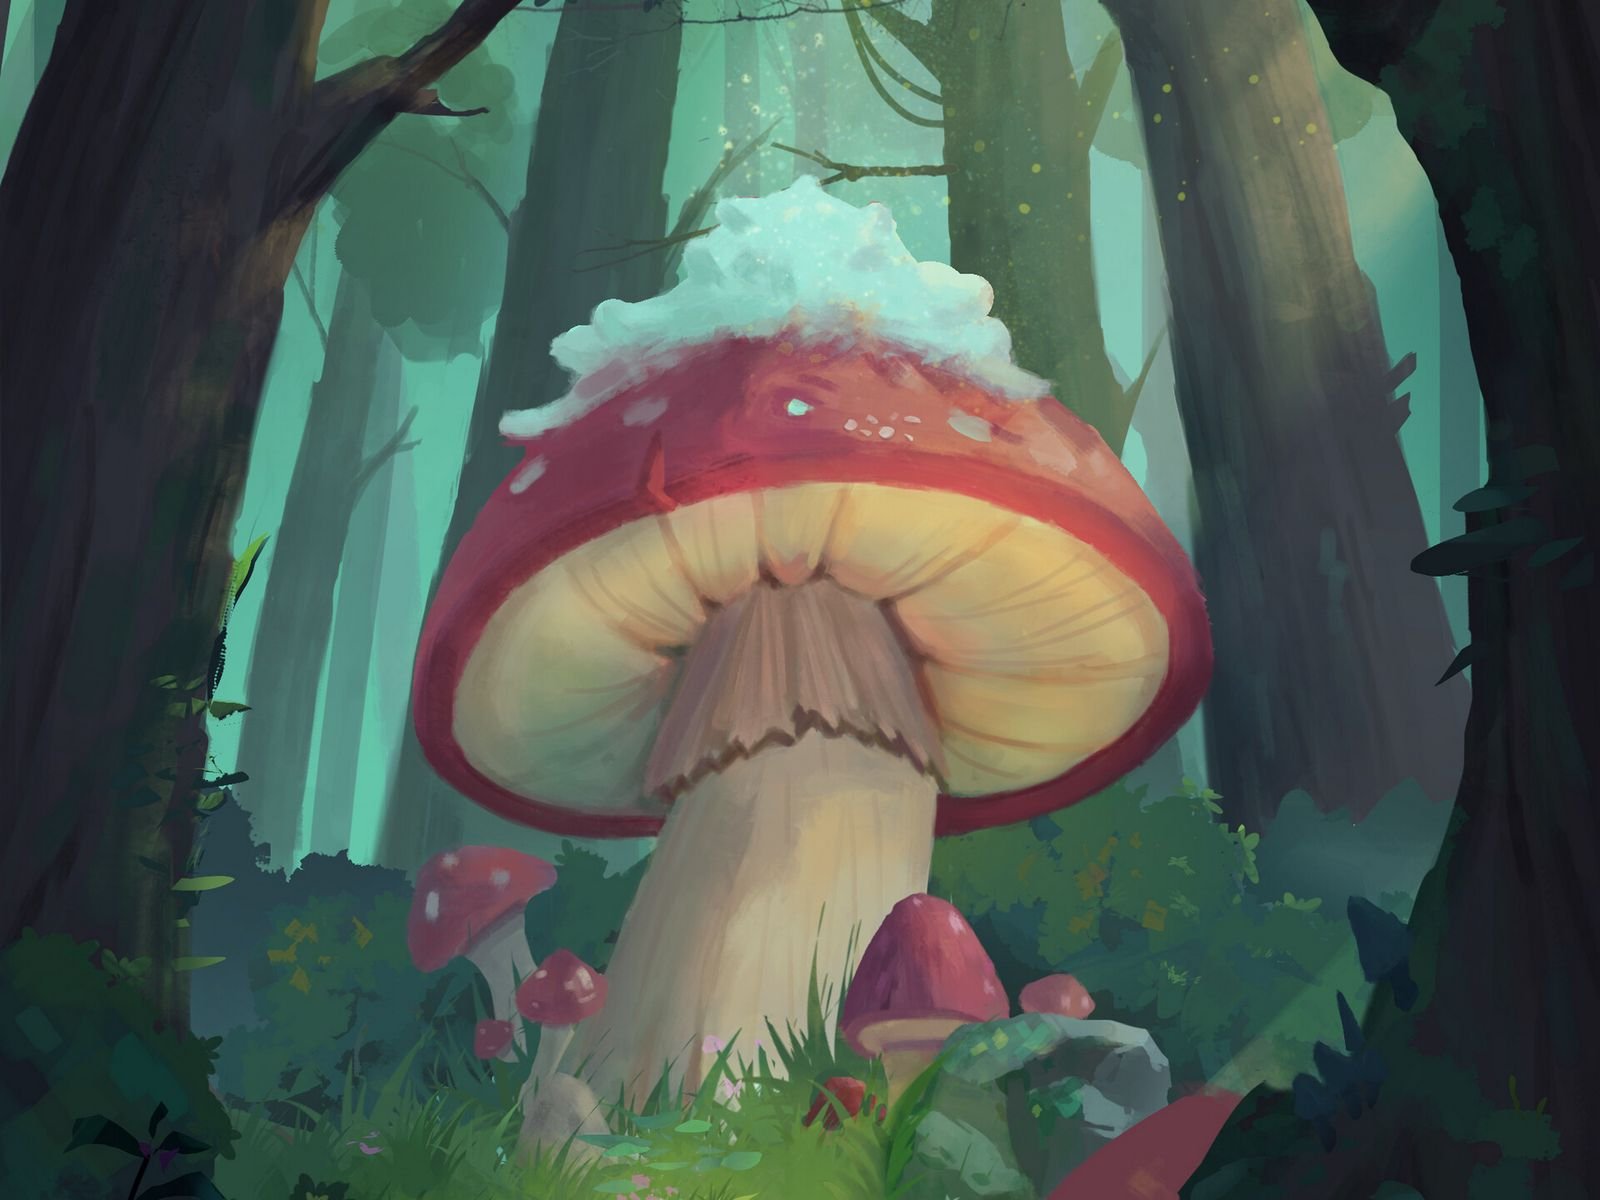 Живые грибы. Грибы арт. Милый грибочек арт. Необычные грибы обои. Бирюзовый гриб арт.